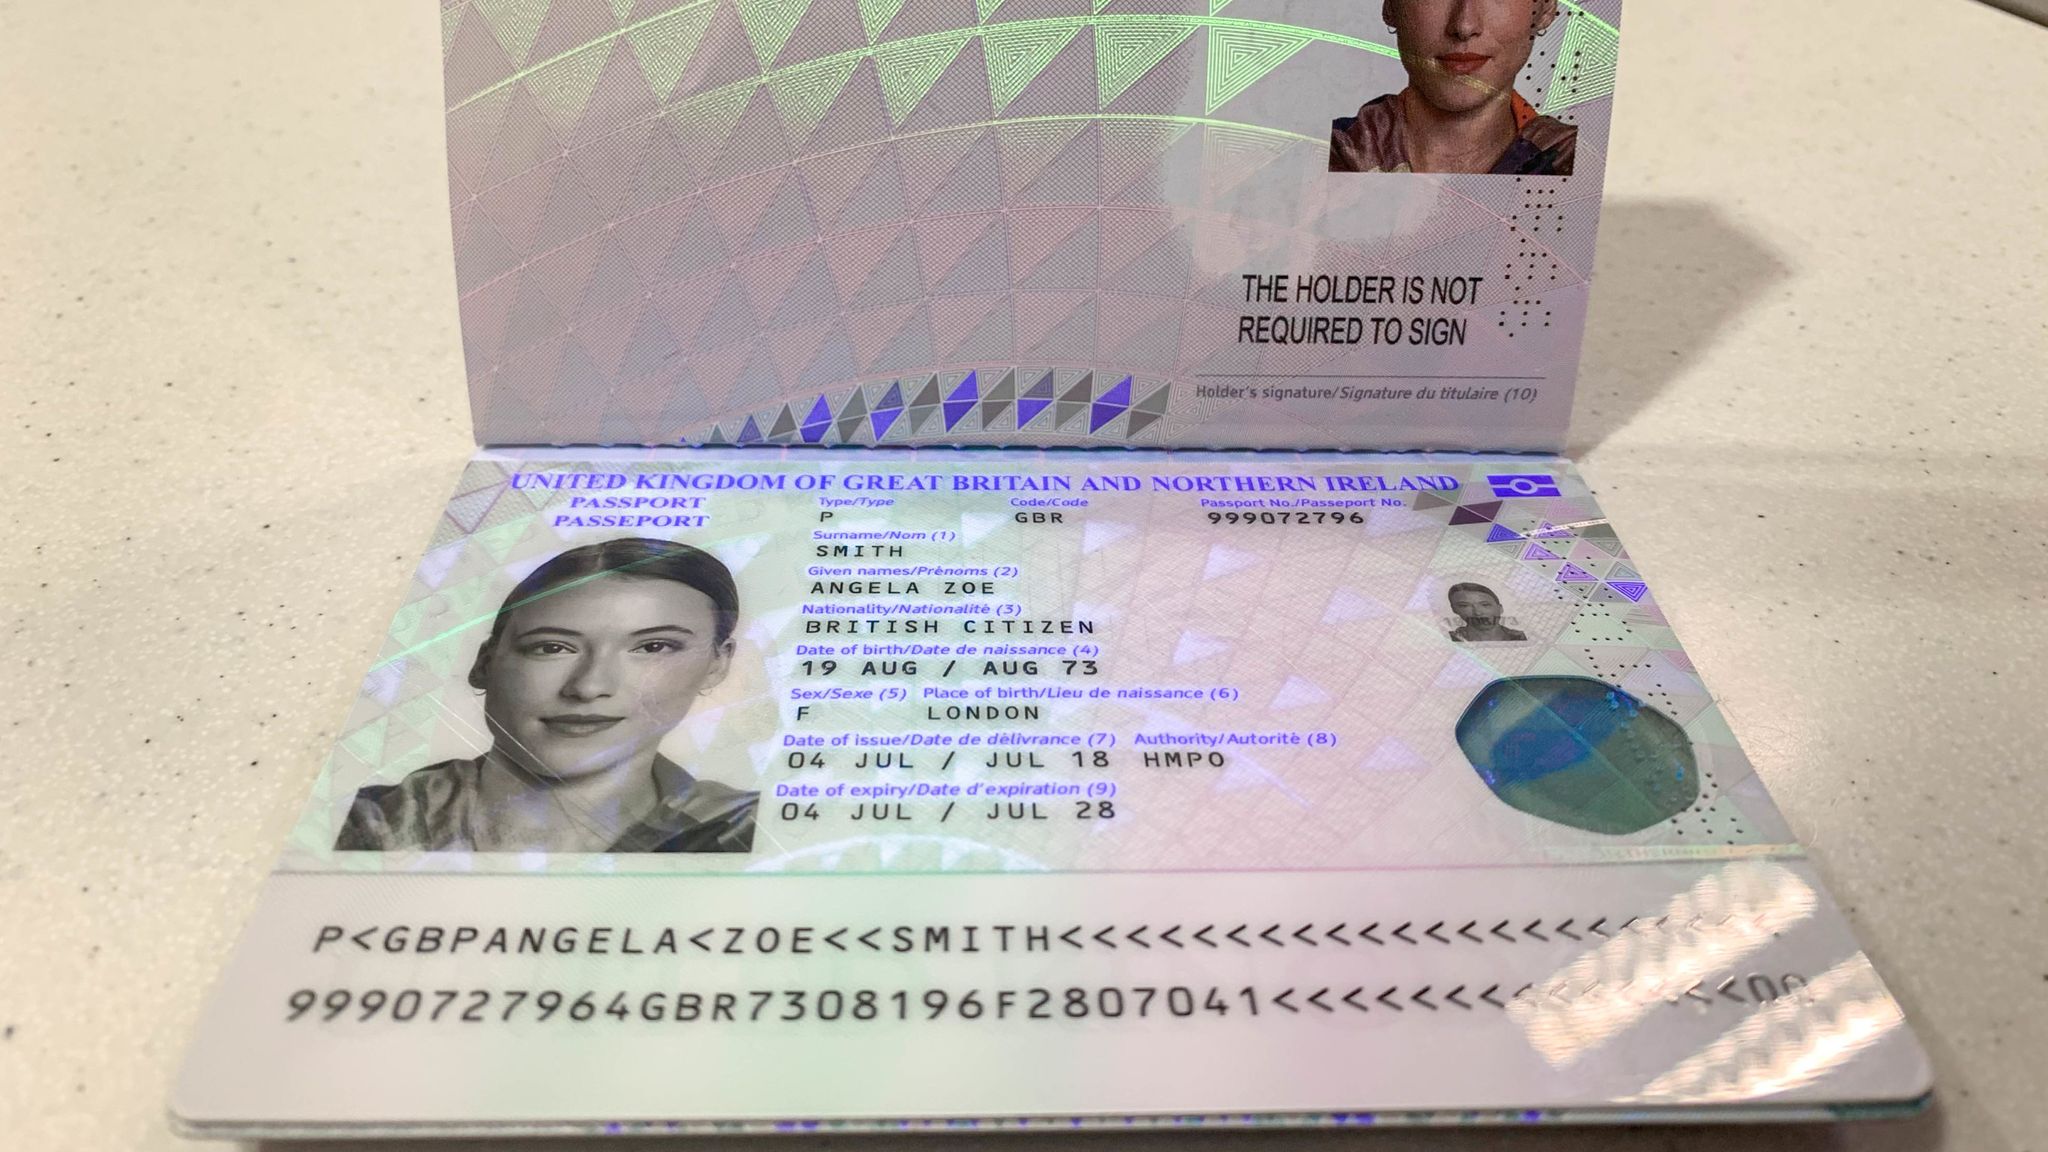 passport photo online